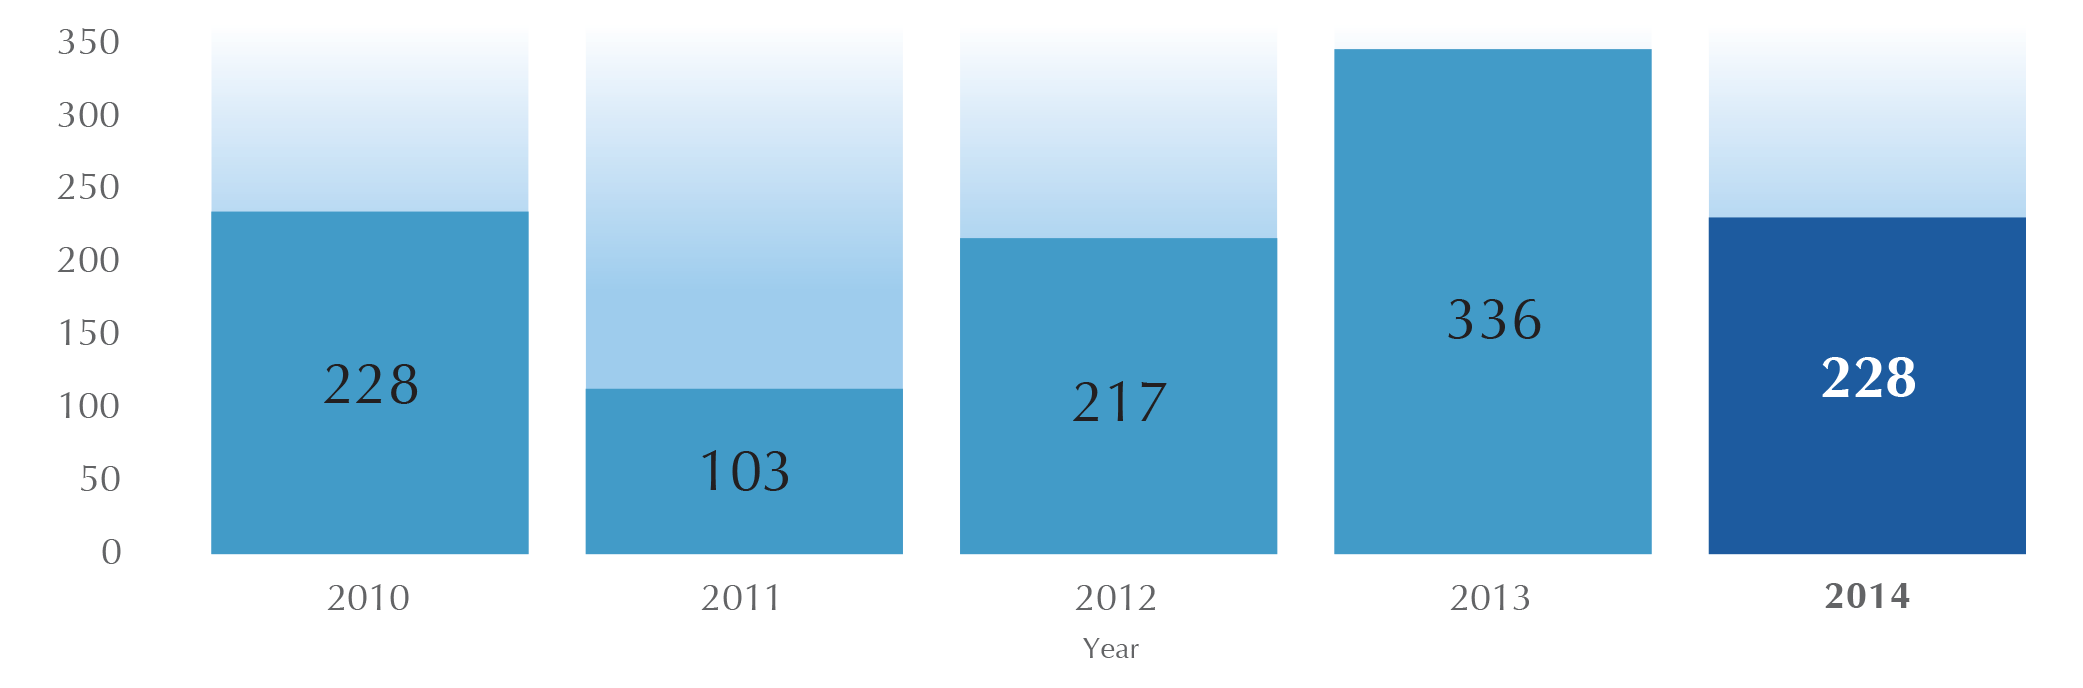 Annual Yield 2010-2014 Diagram